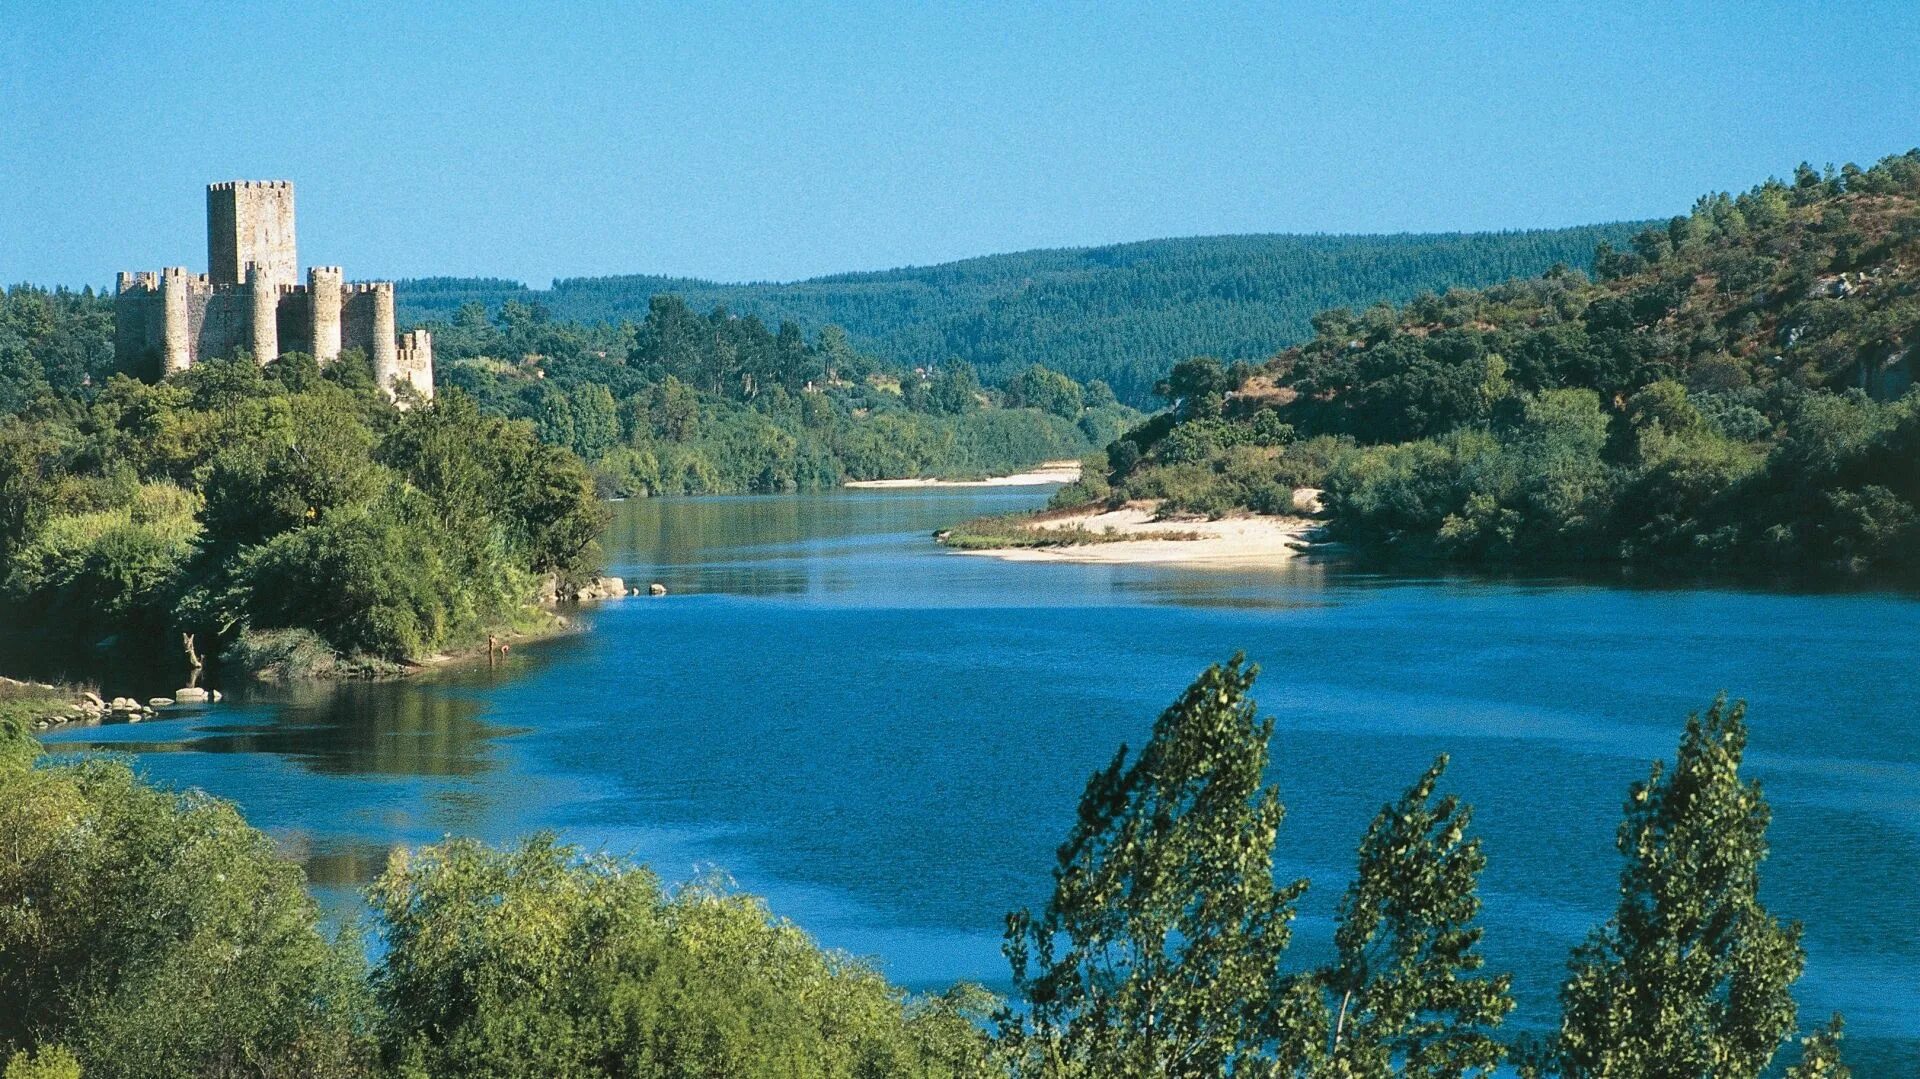 Устье тахо. Река Тежу в Португалии. Река Тежу в Лиссабоне. Река Тахо Лиссабон. Река Тахо в Португалии.